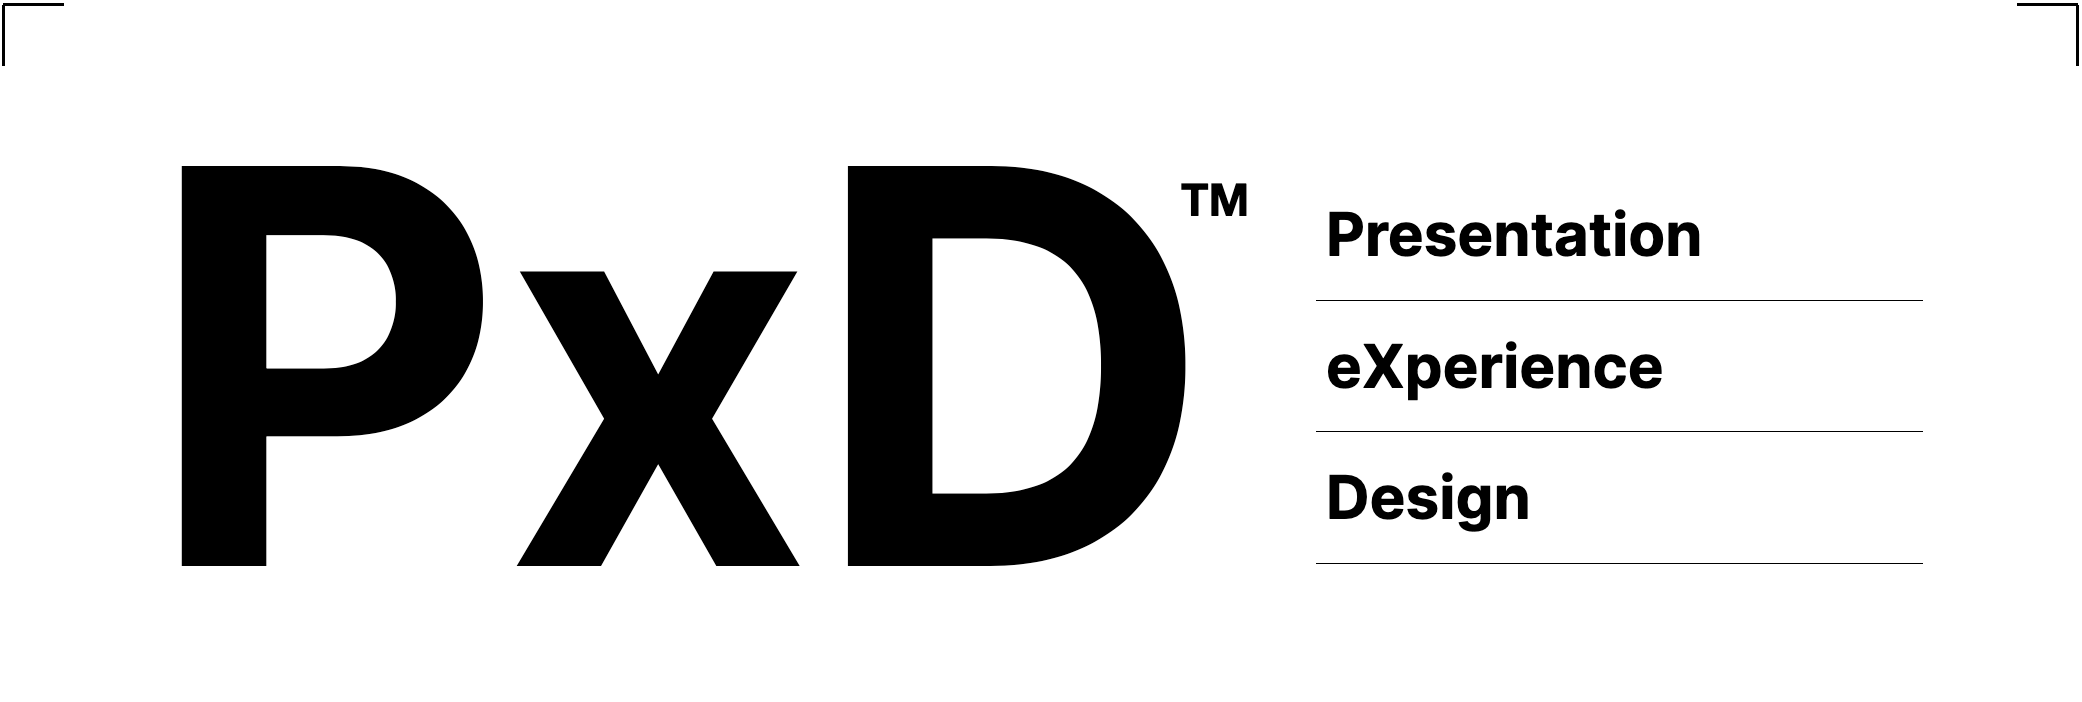 The Presentation eXperience Design (PxD) Process